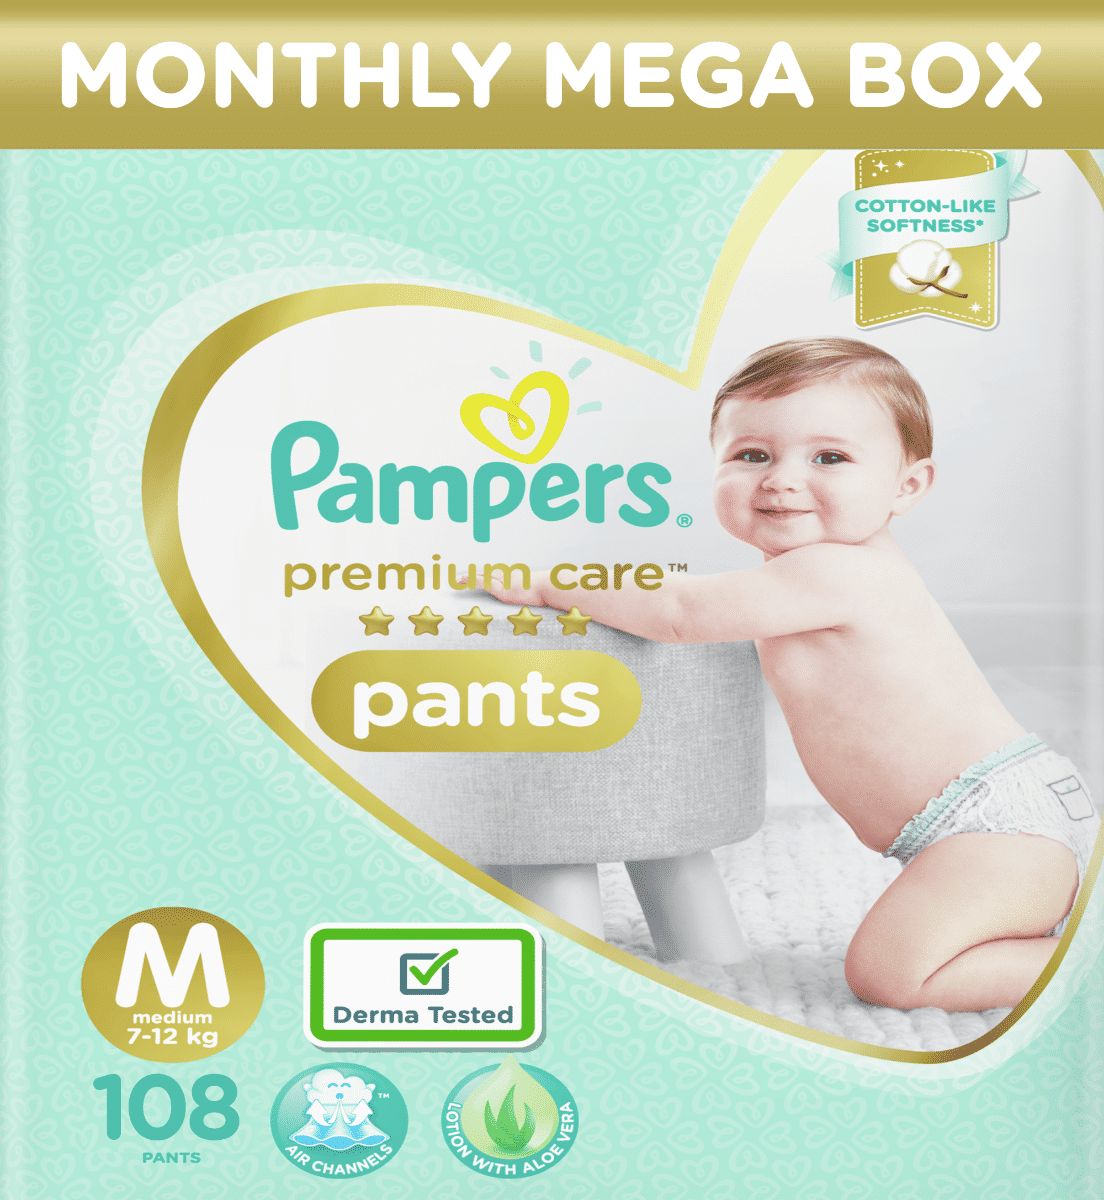 Buy Pampers Premium Care Diaper Pants Medium, 108 Count Online